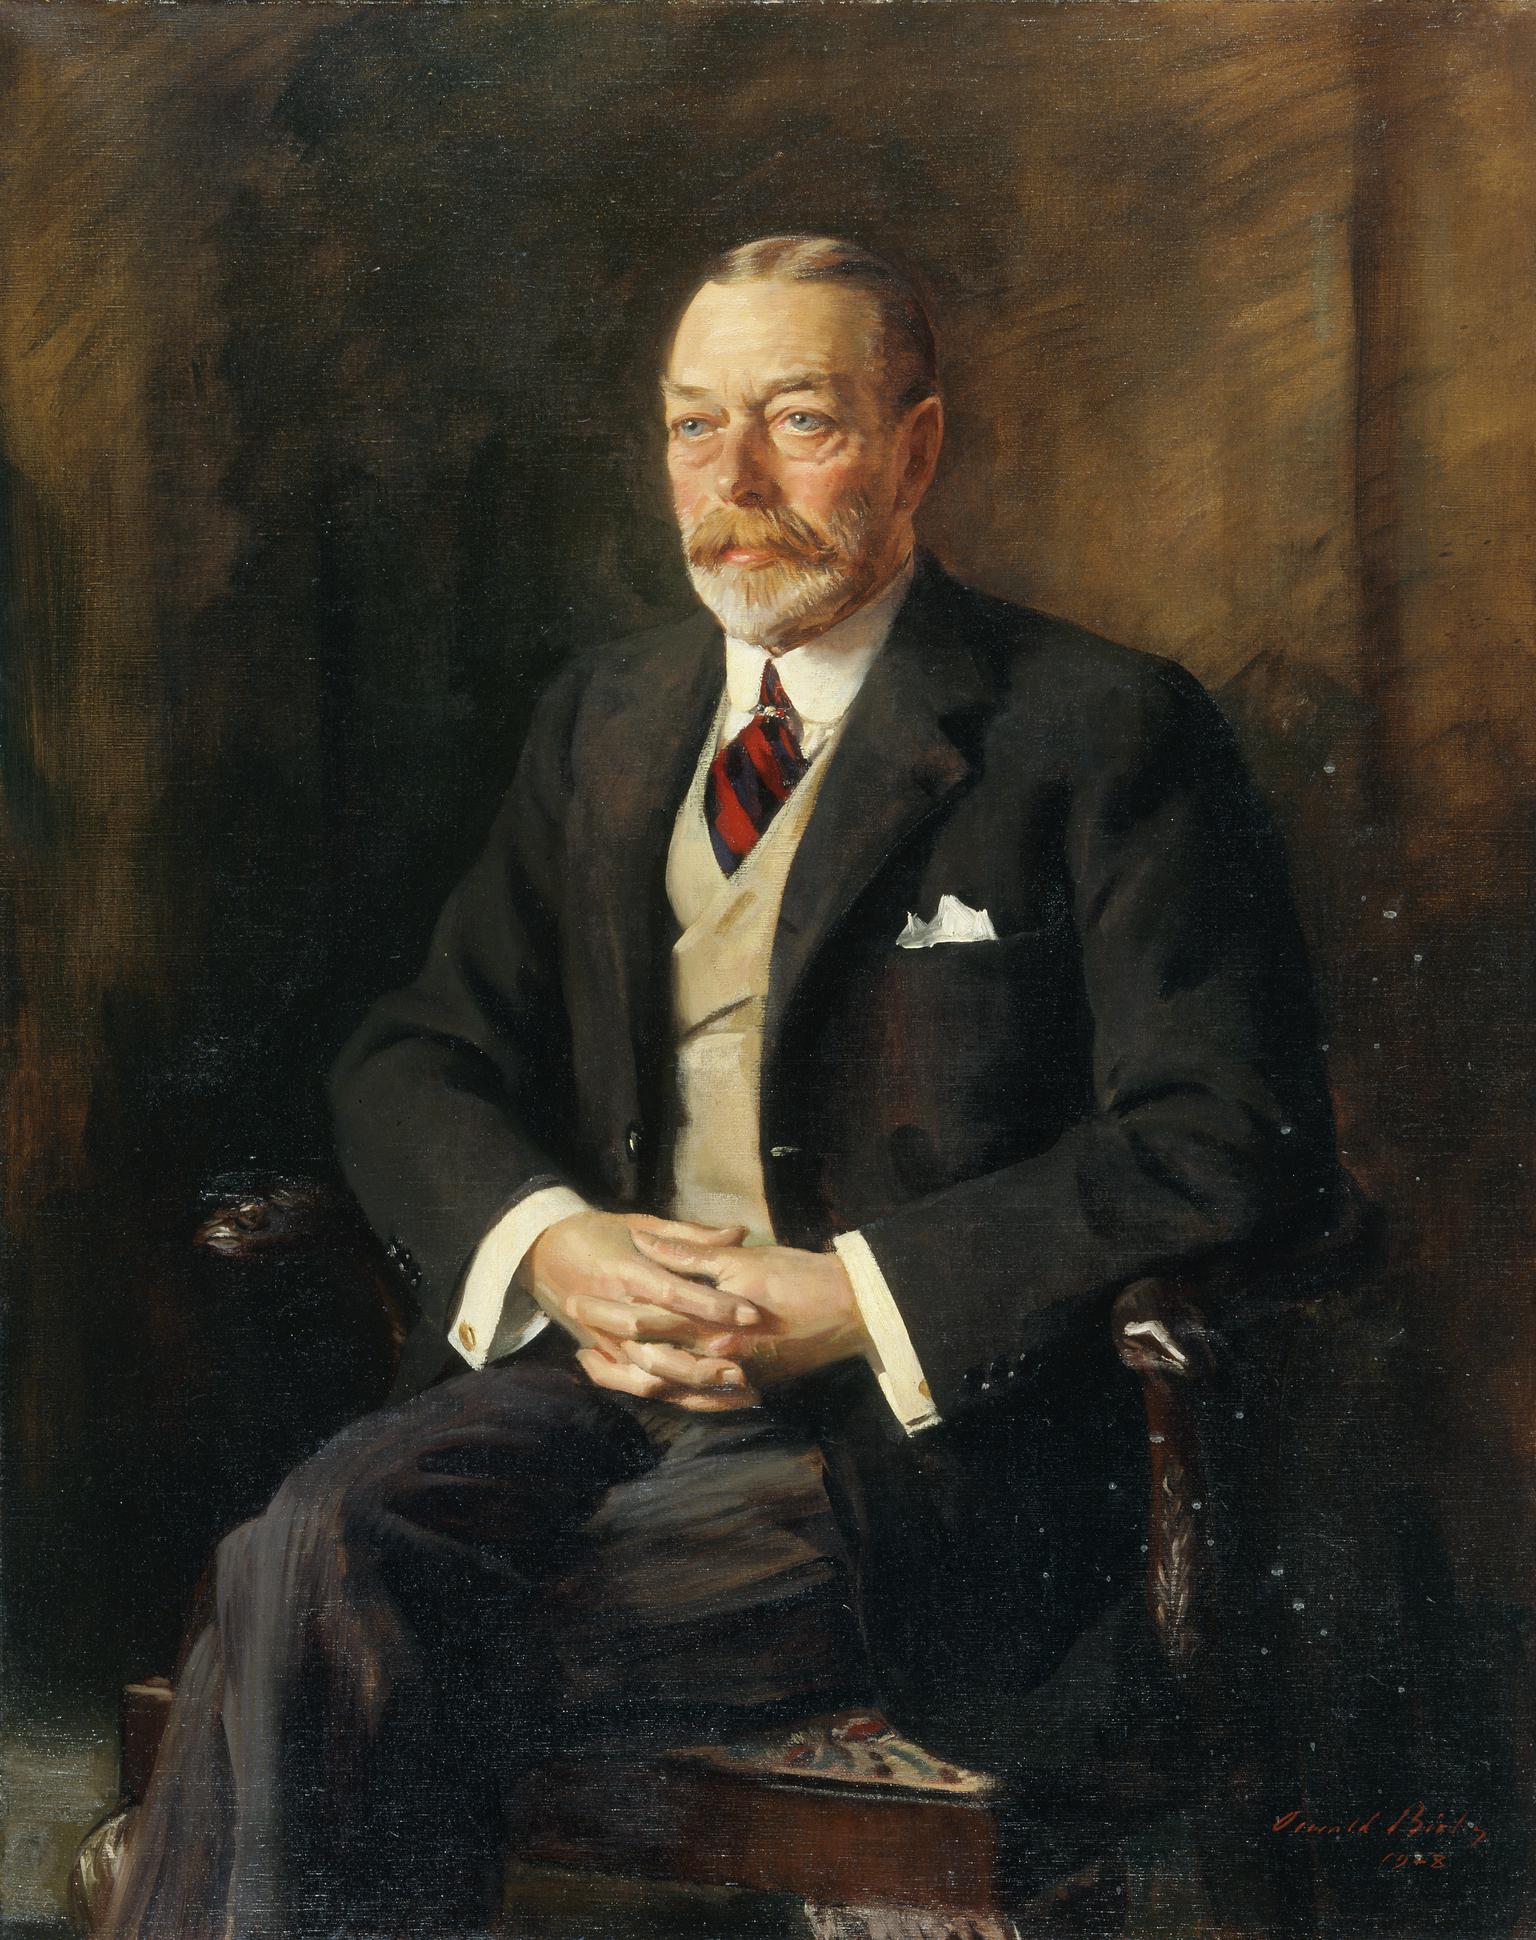 George V (1865-1936)